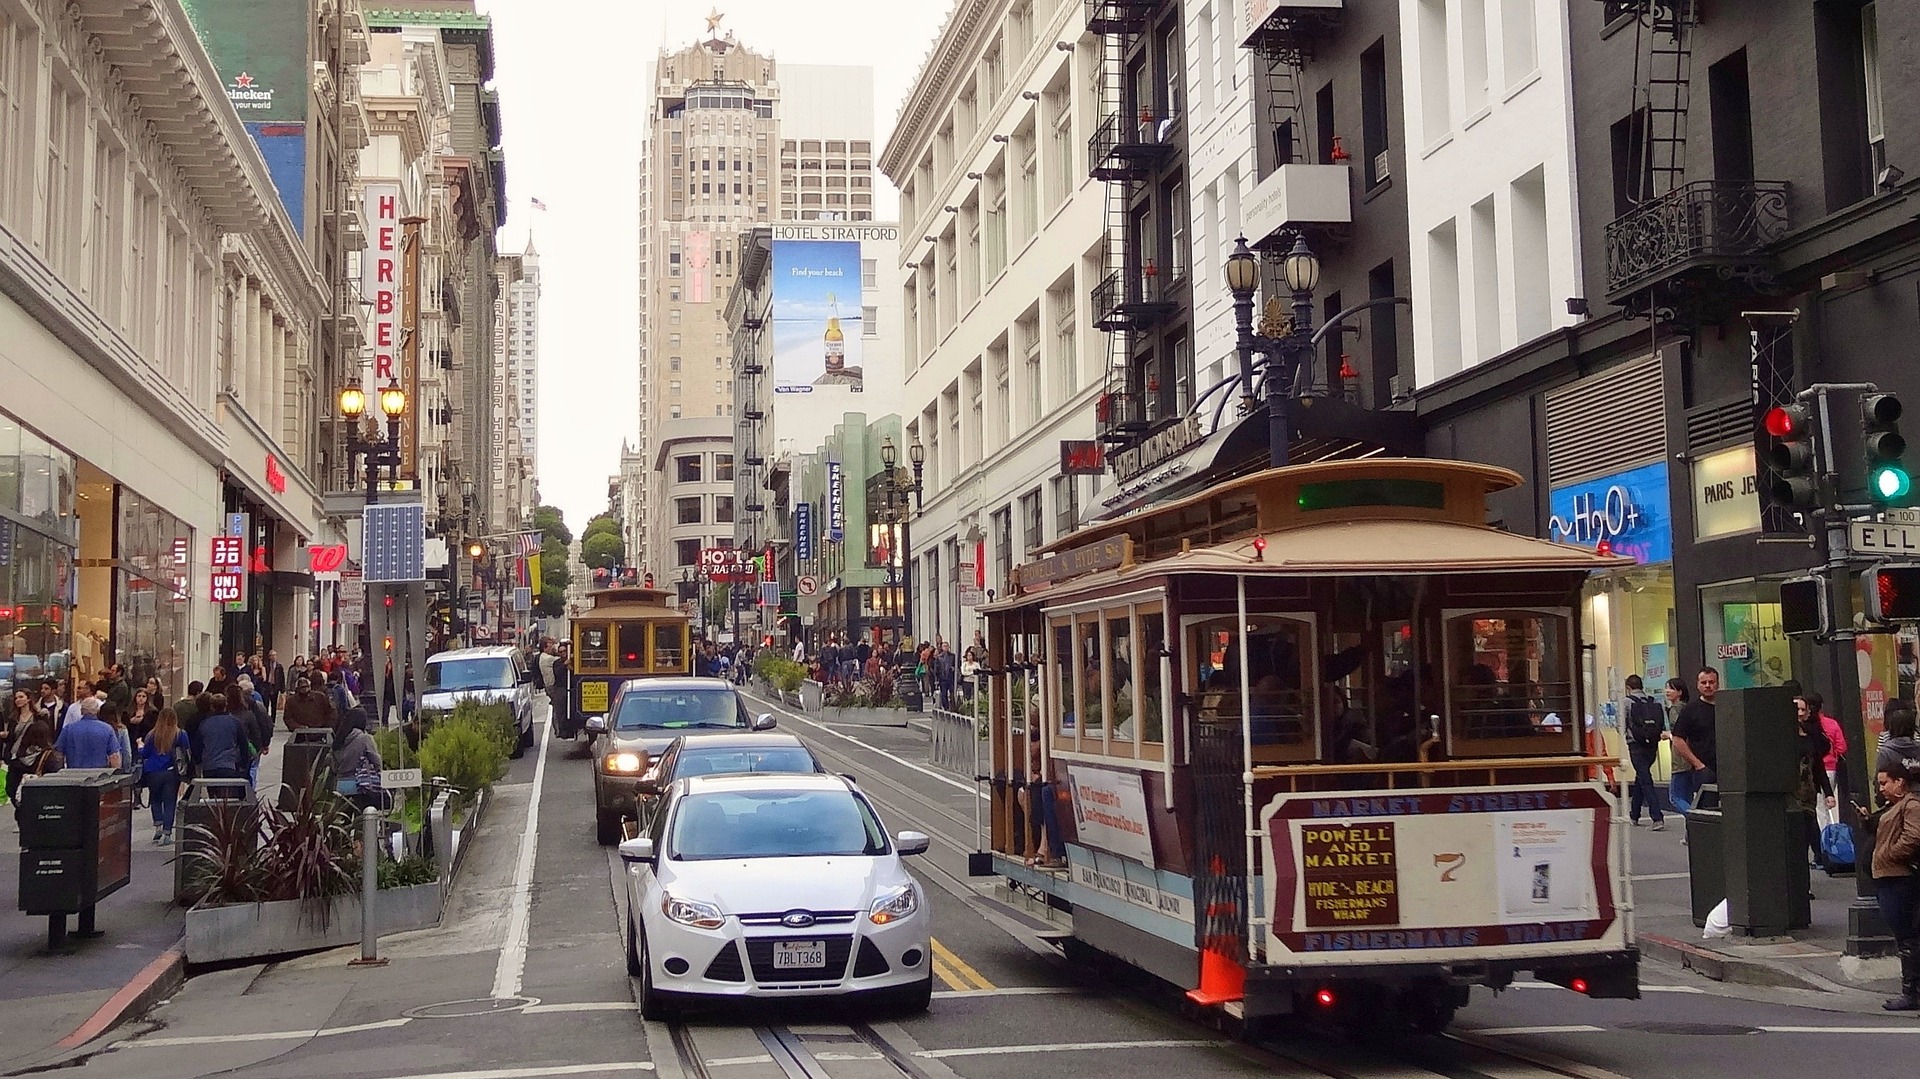 Examining a Contaminated City – San Francisco’s Streets and Sidewalks